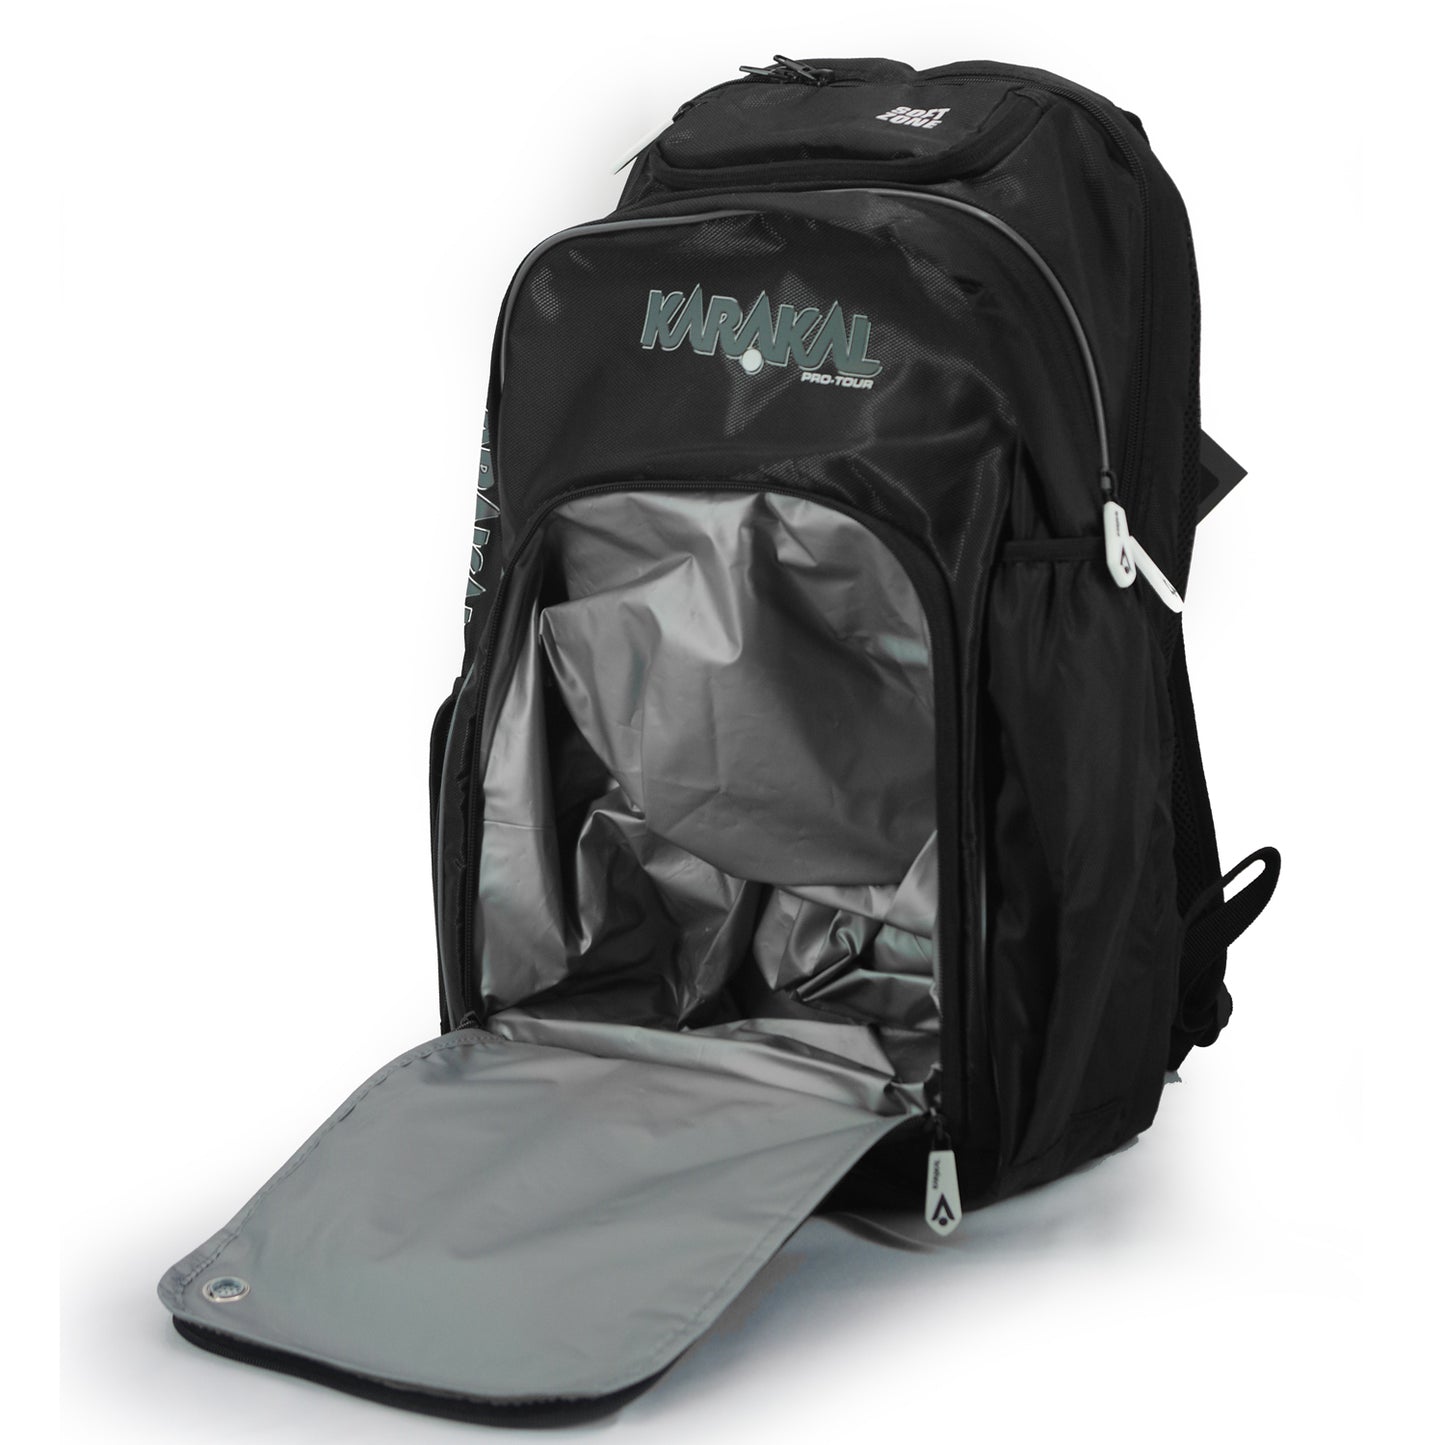 Karakal Pro Tour 30 2.1 Backpack with White Trim